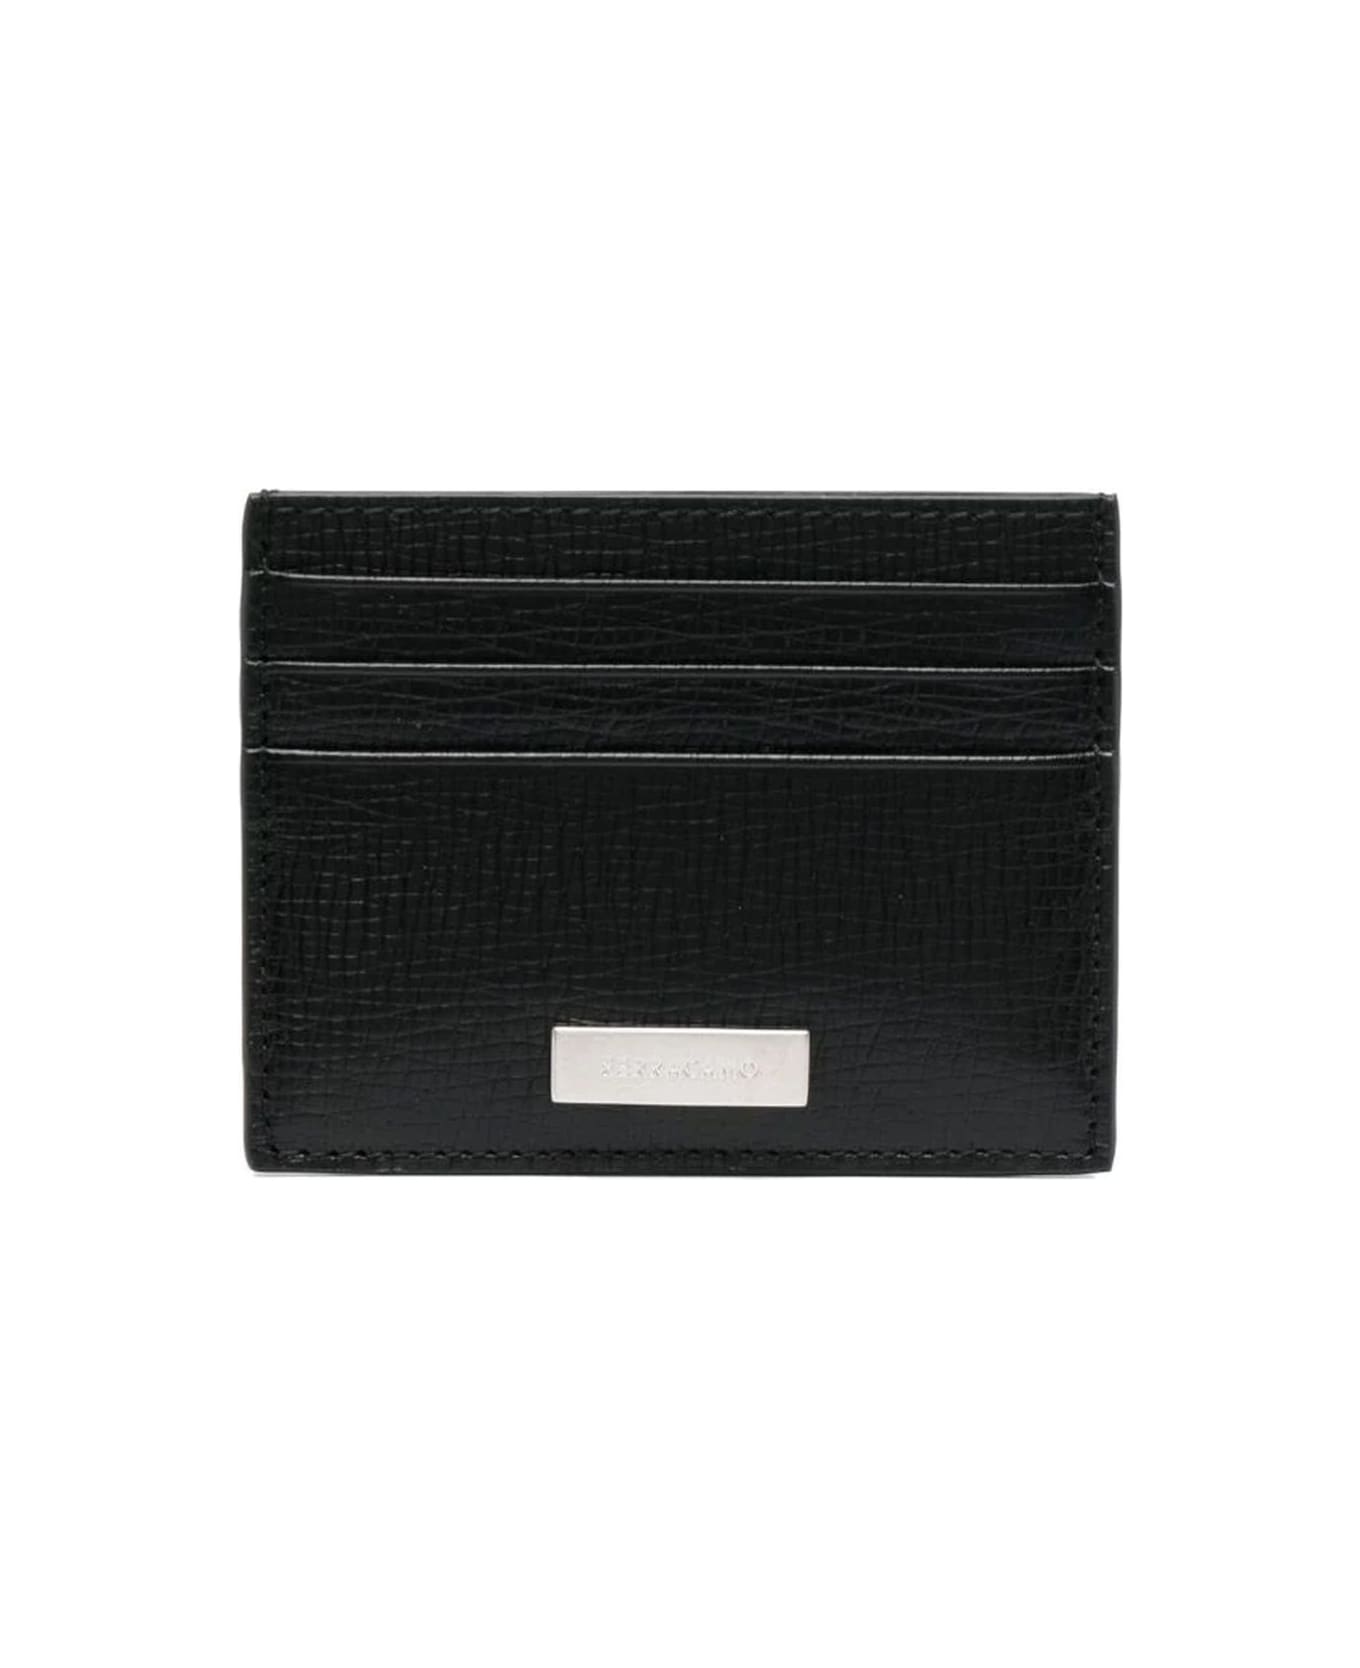 Ferragamo Black Calf Leather Wallet - Black